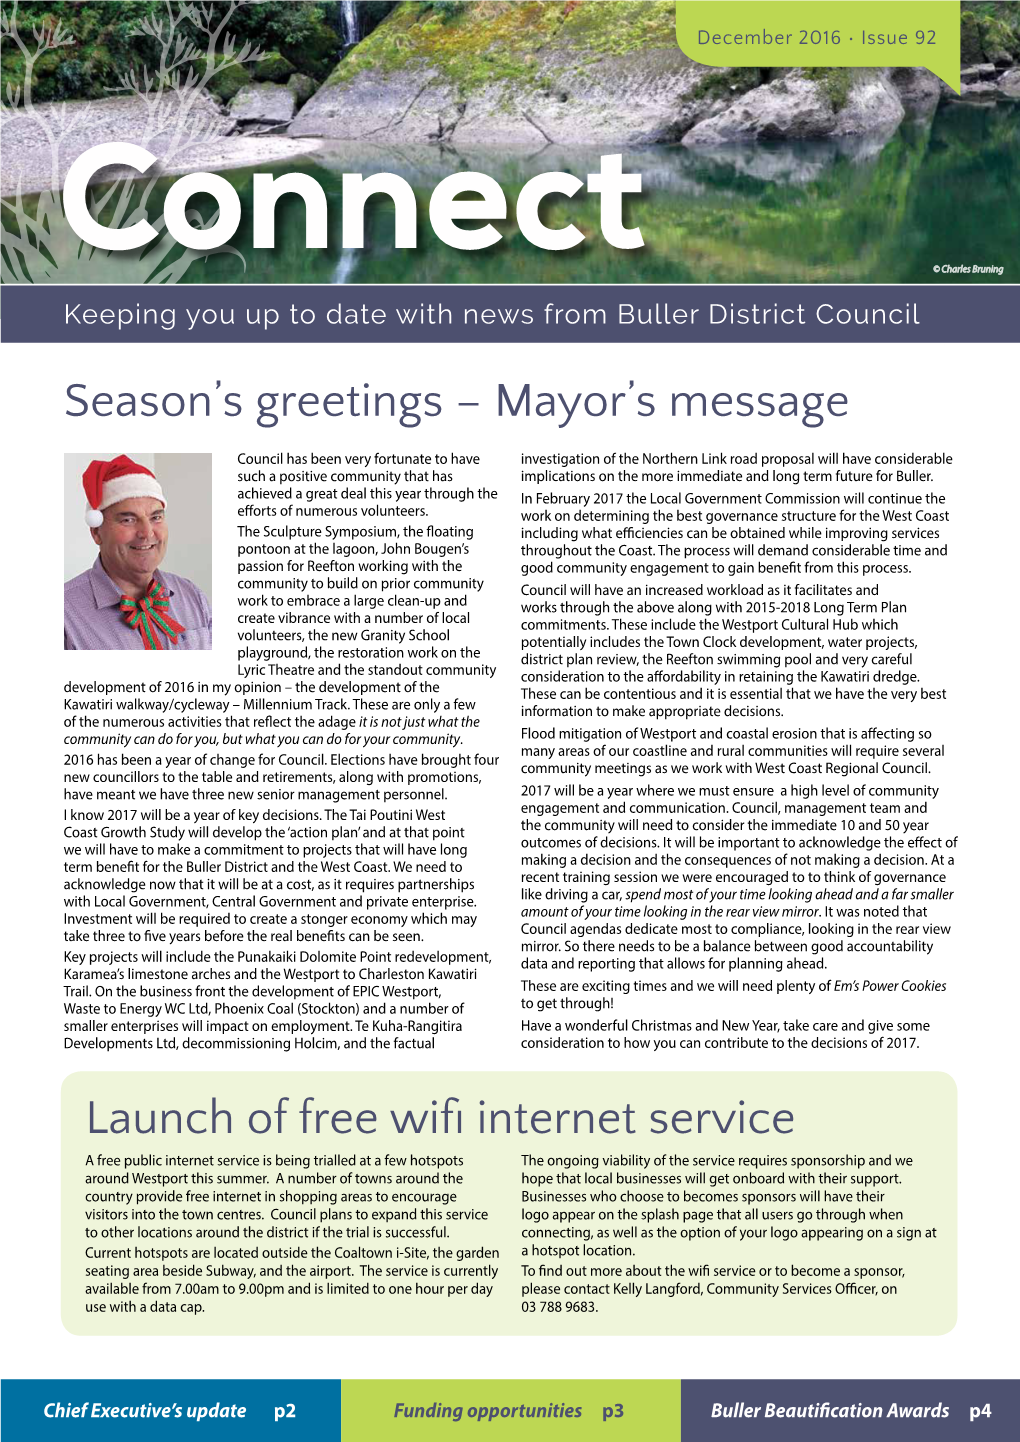 Season's Greetings – Mayor's Message Launch of Free Wifi Internet Service